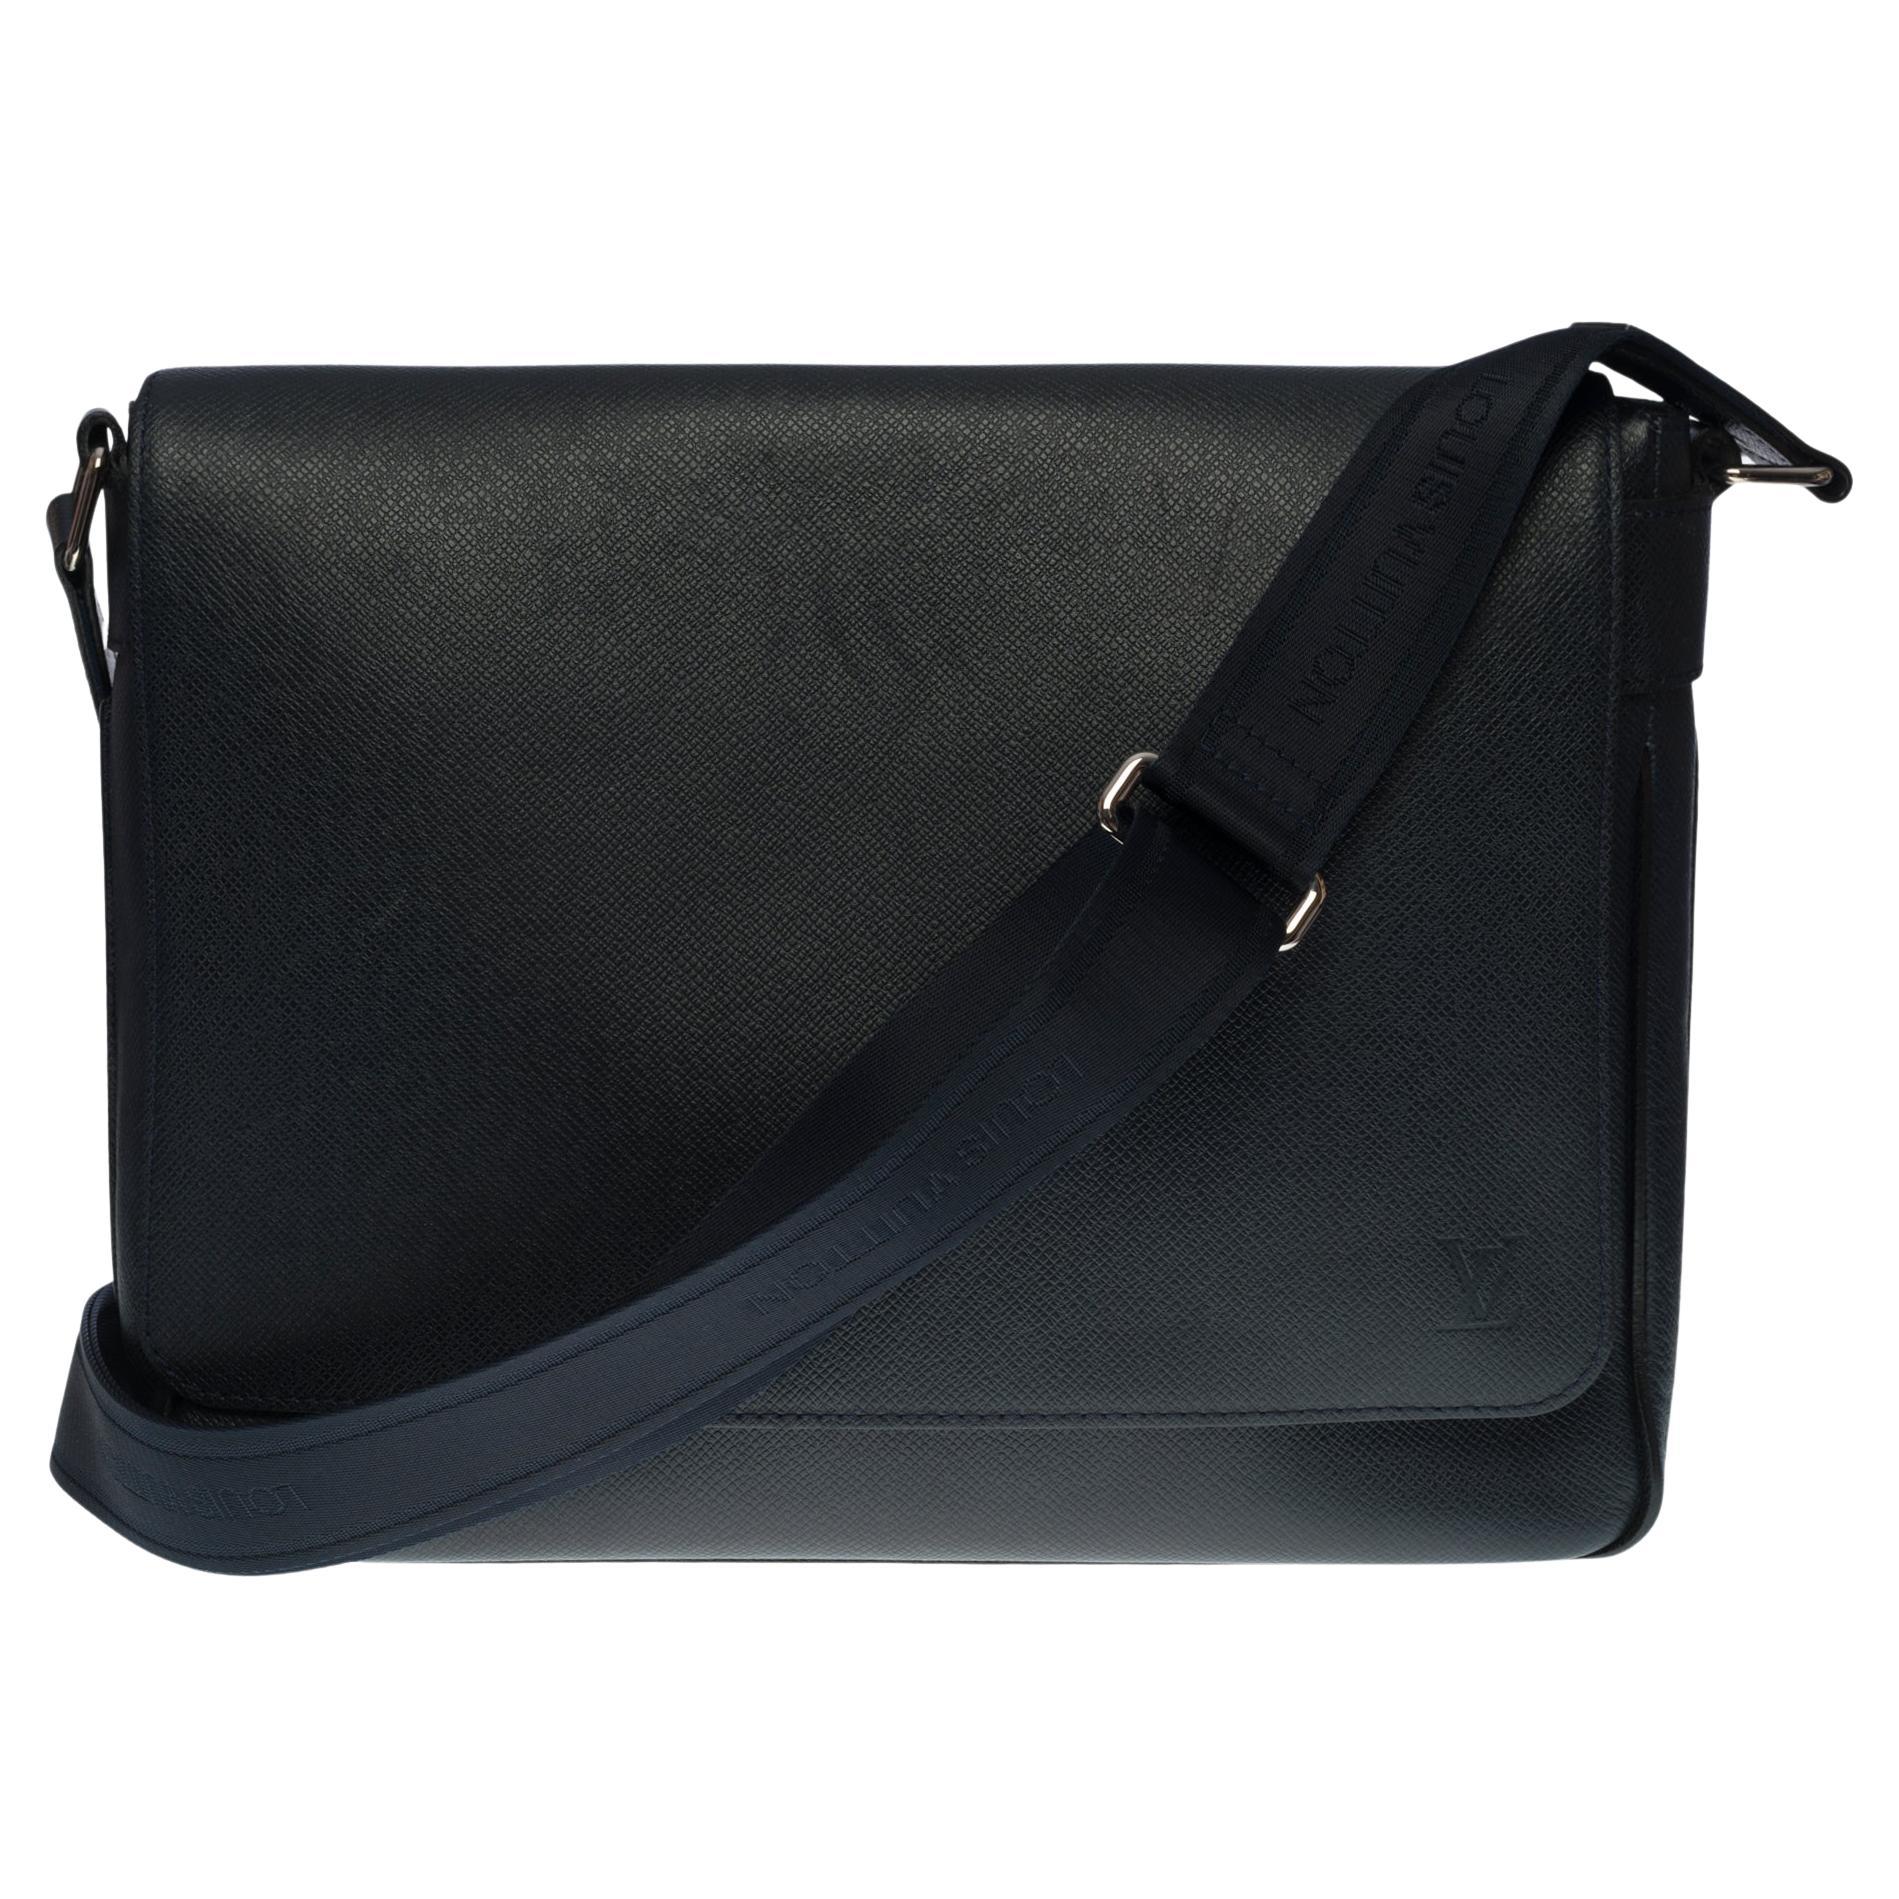 Very Chic Louis Vuitton  Messenger shoulder bag in Navy blue Taïga leather, SHW